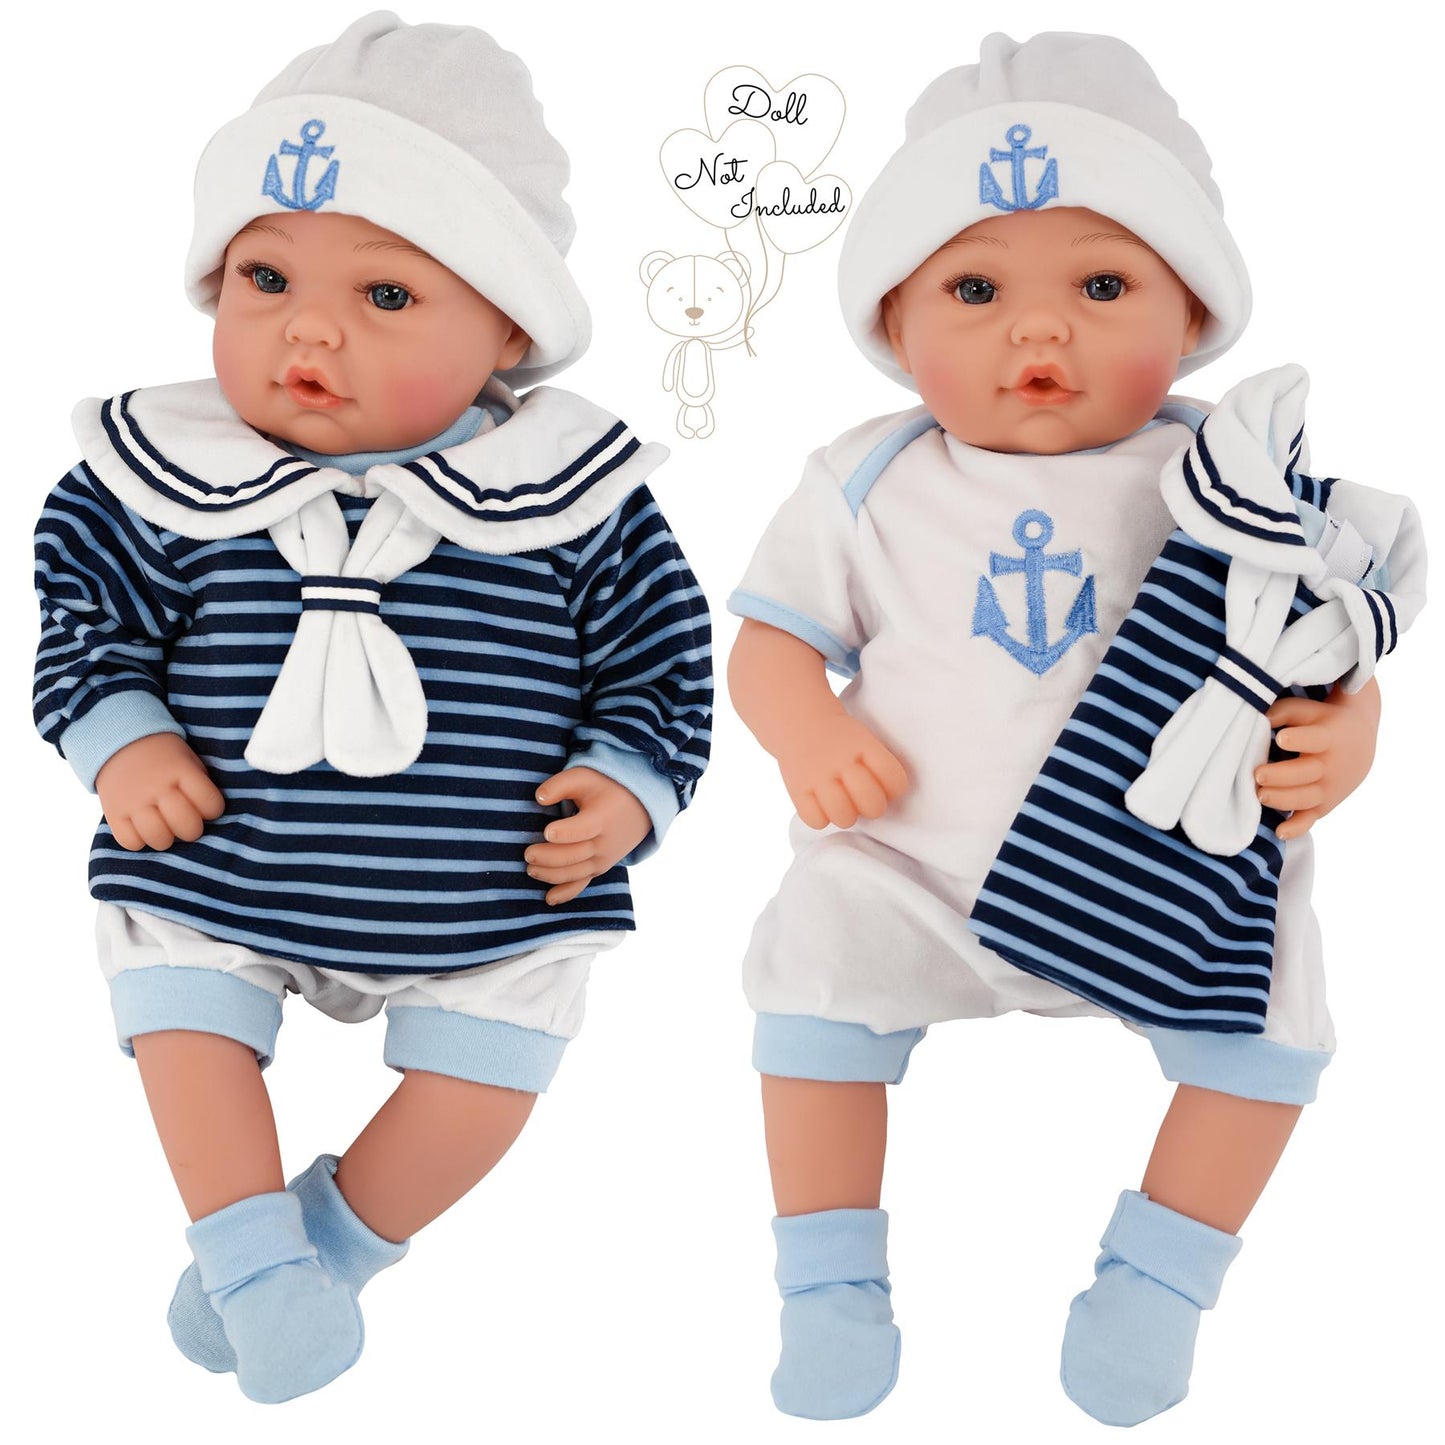 BiBi Outfits - Reborn Doll Clothes (Sailor) (50 cm / 20") by BiBi Doll - UKBuyZone